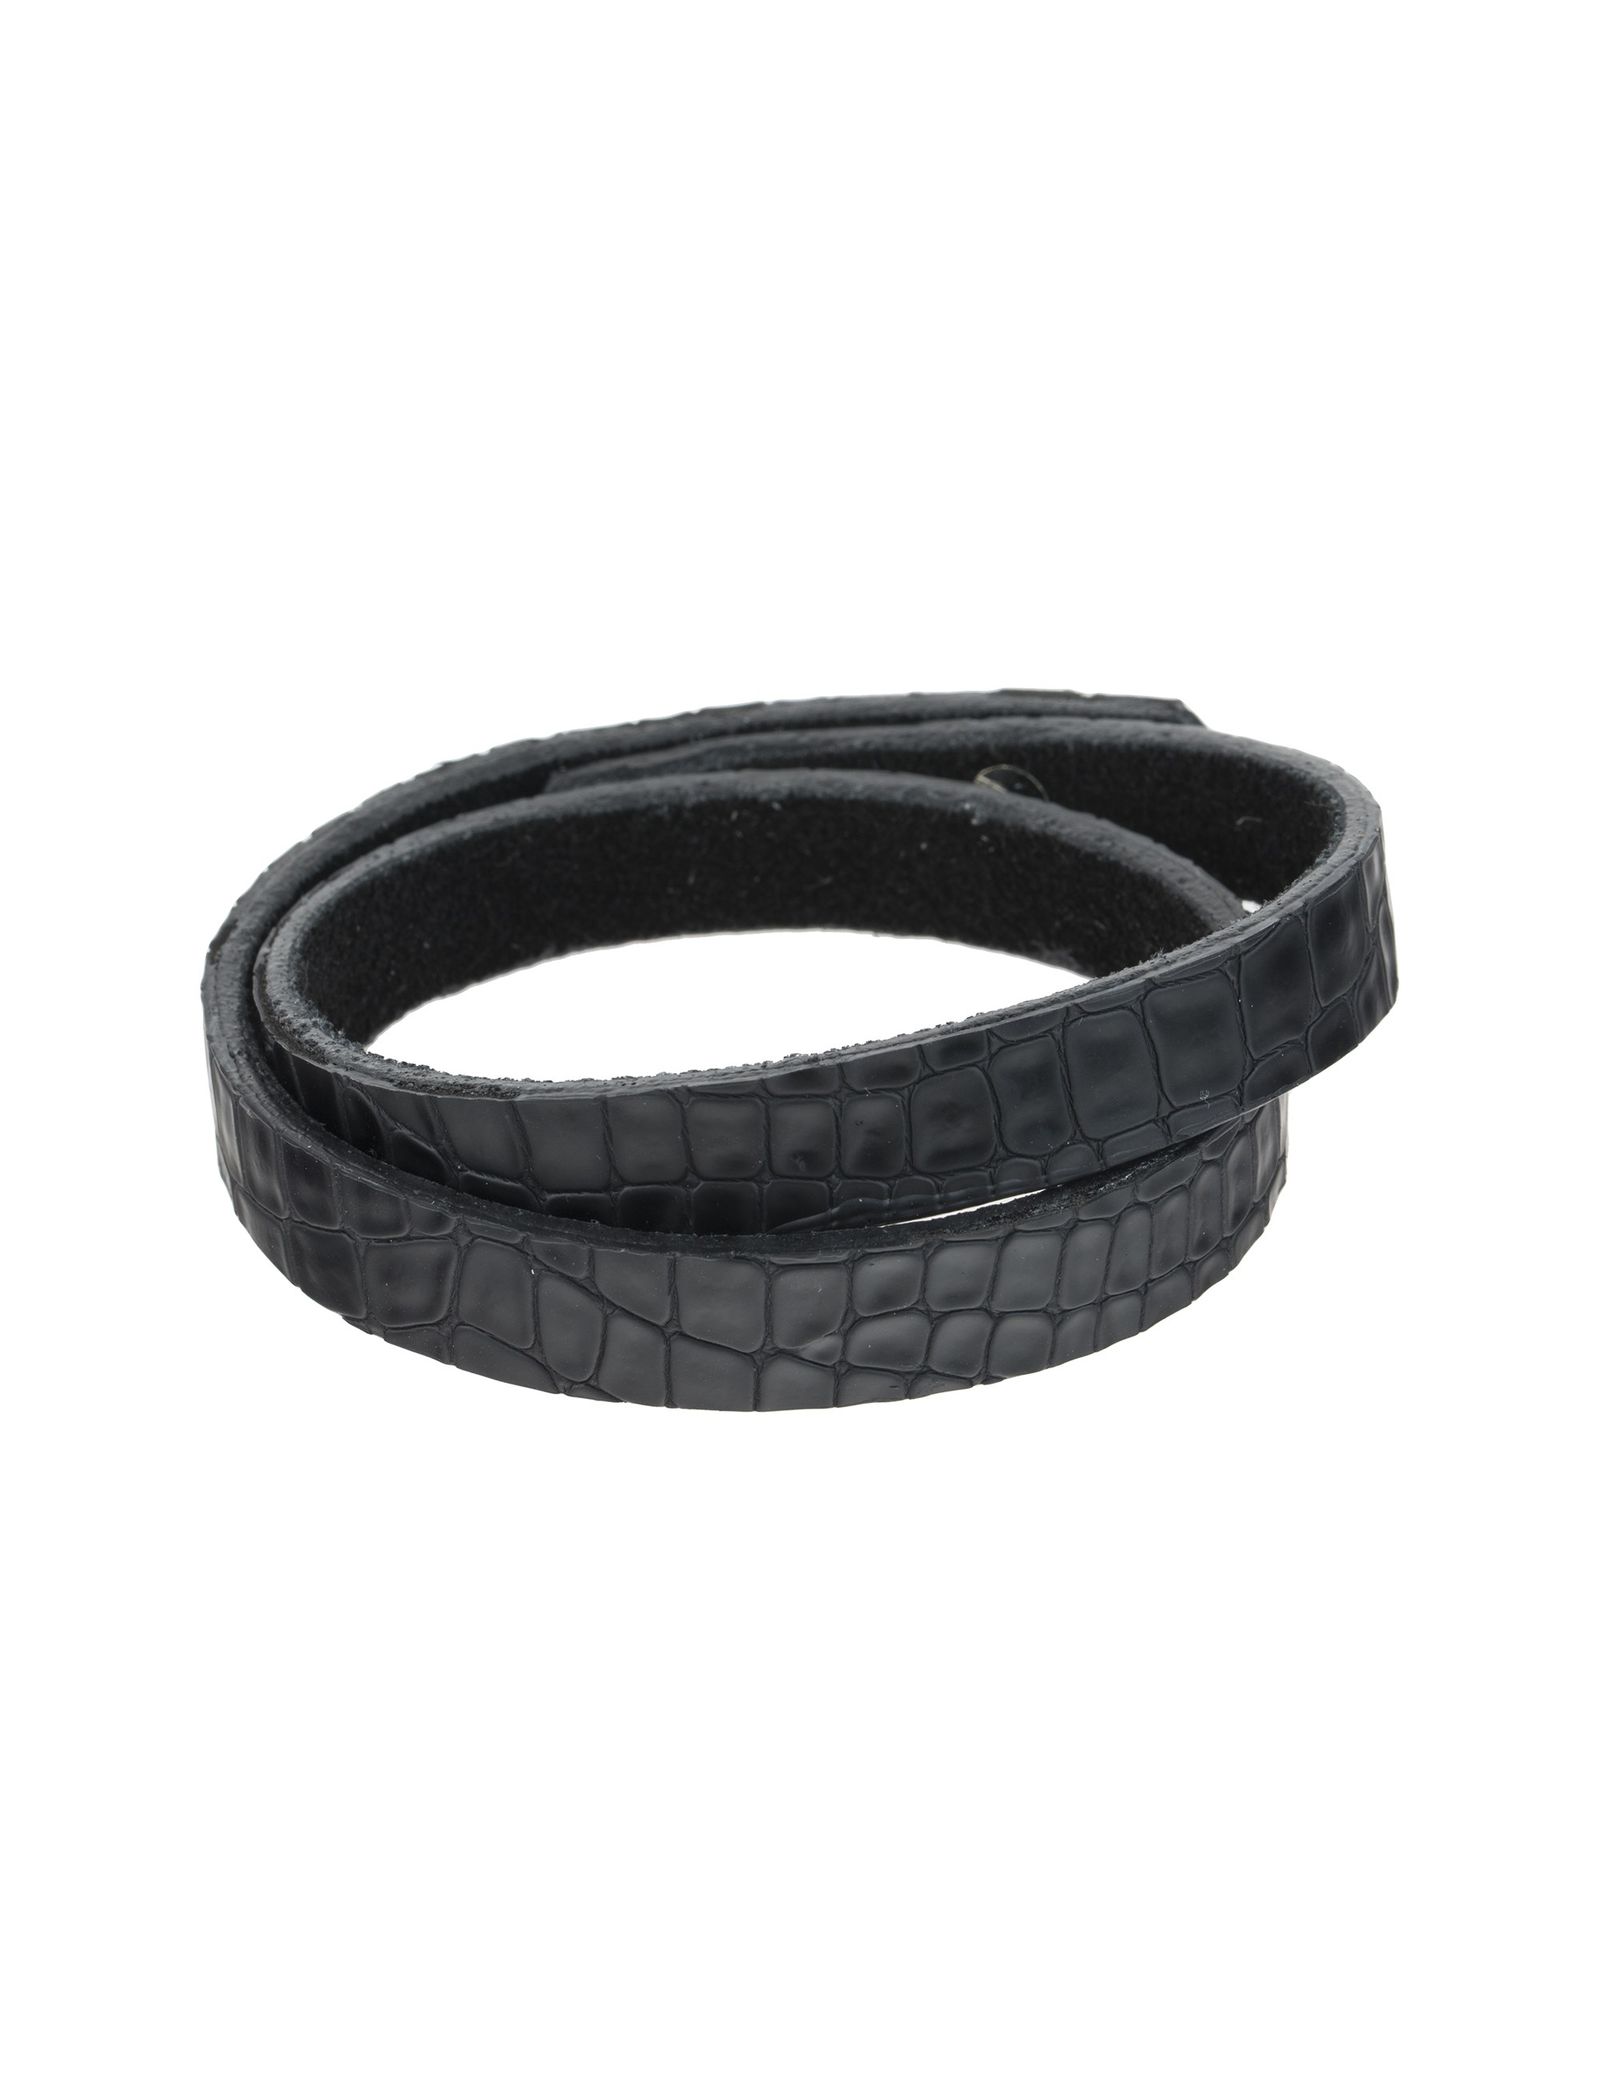 دستبند چرم مردانه - ماکو دیزاین سایز 42 cm - مشکي - 2